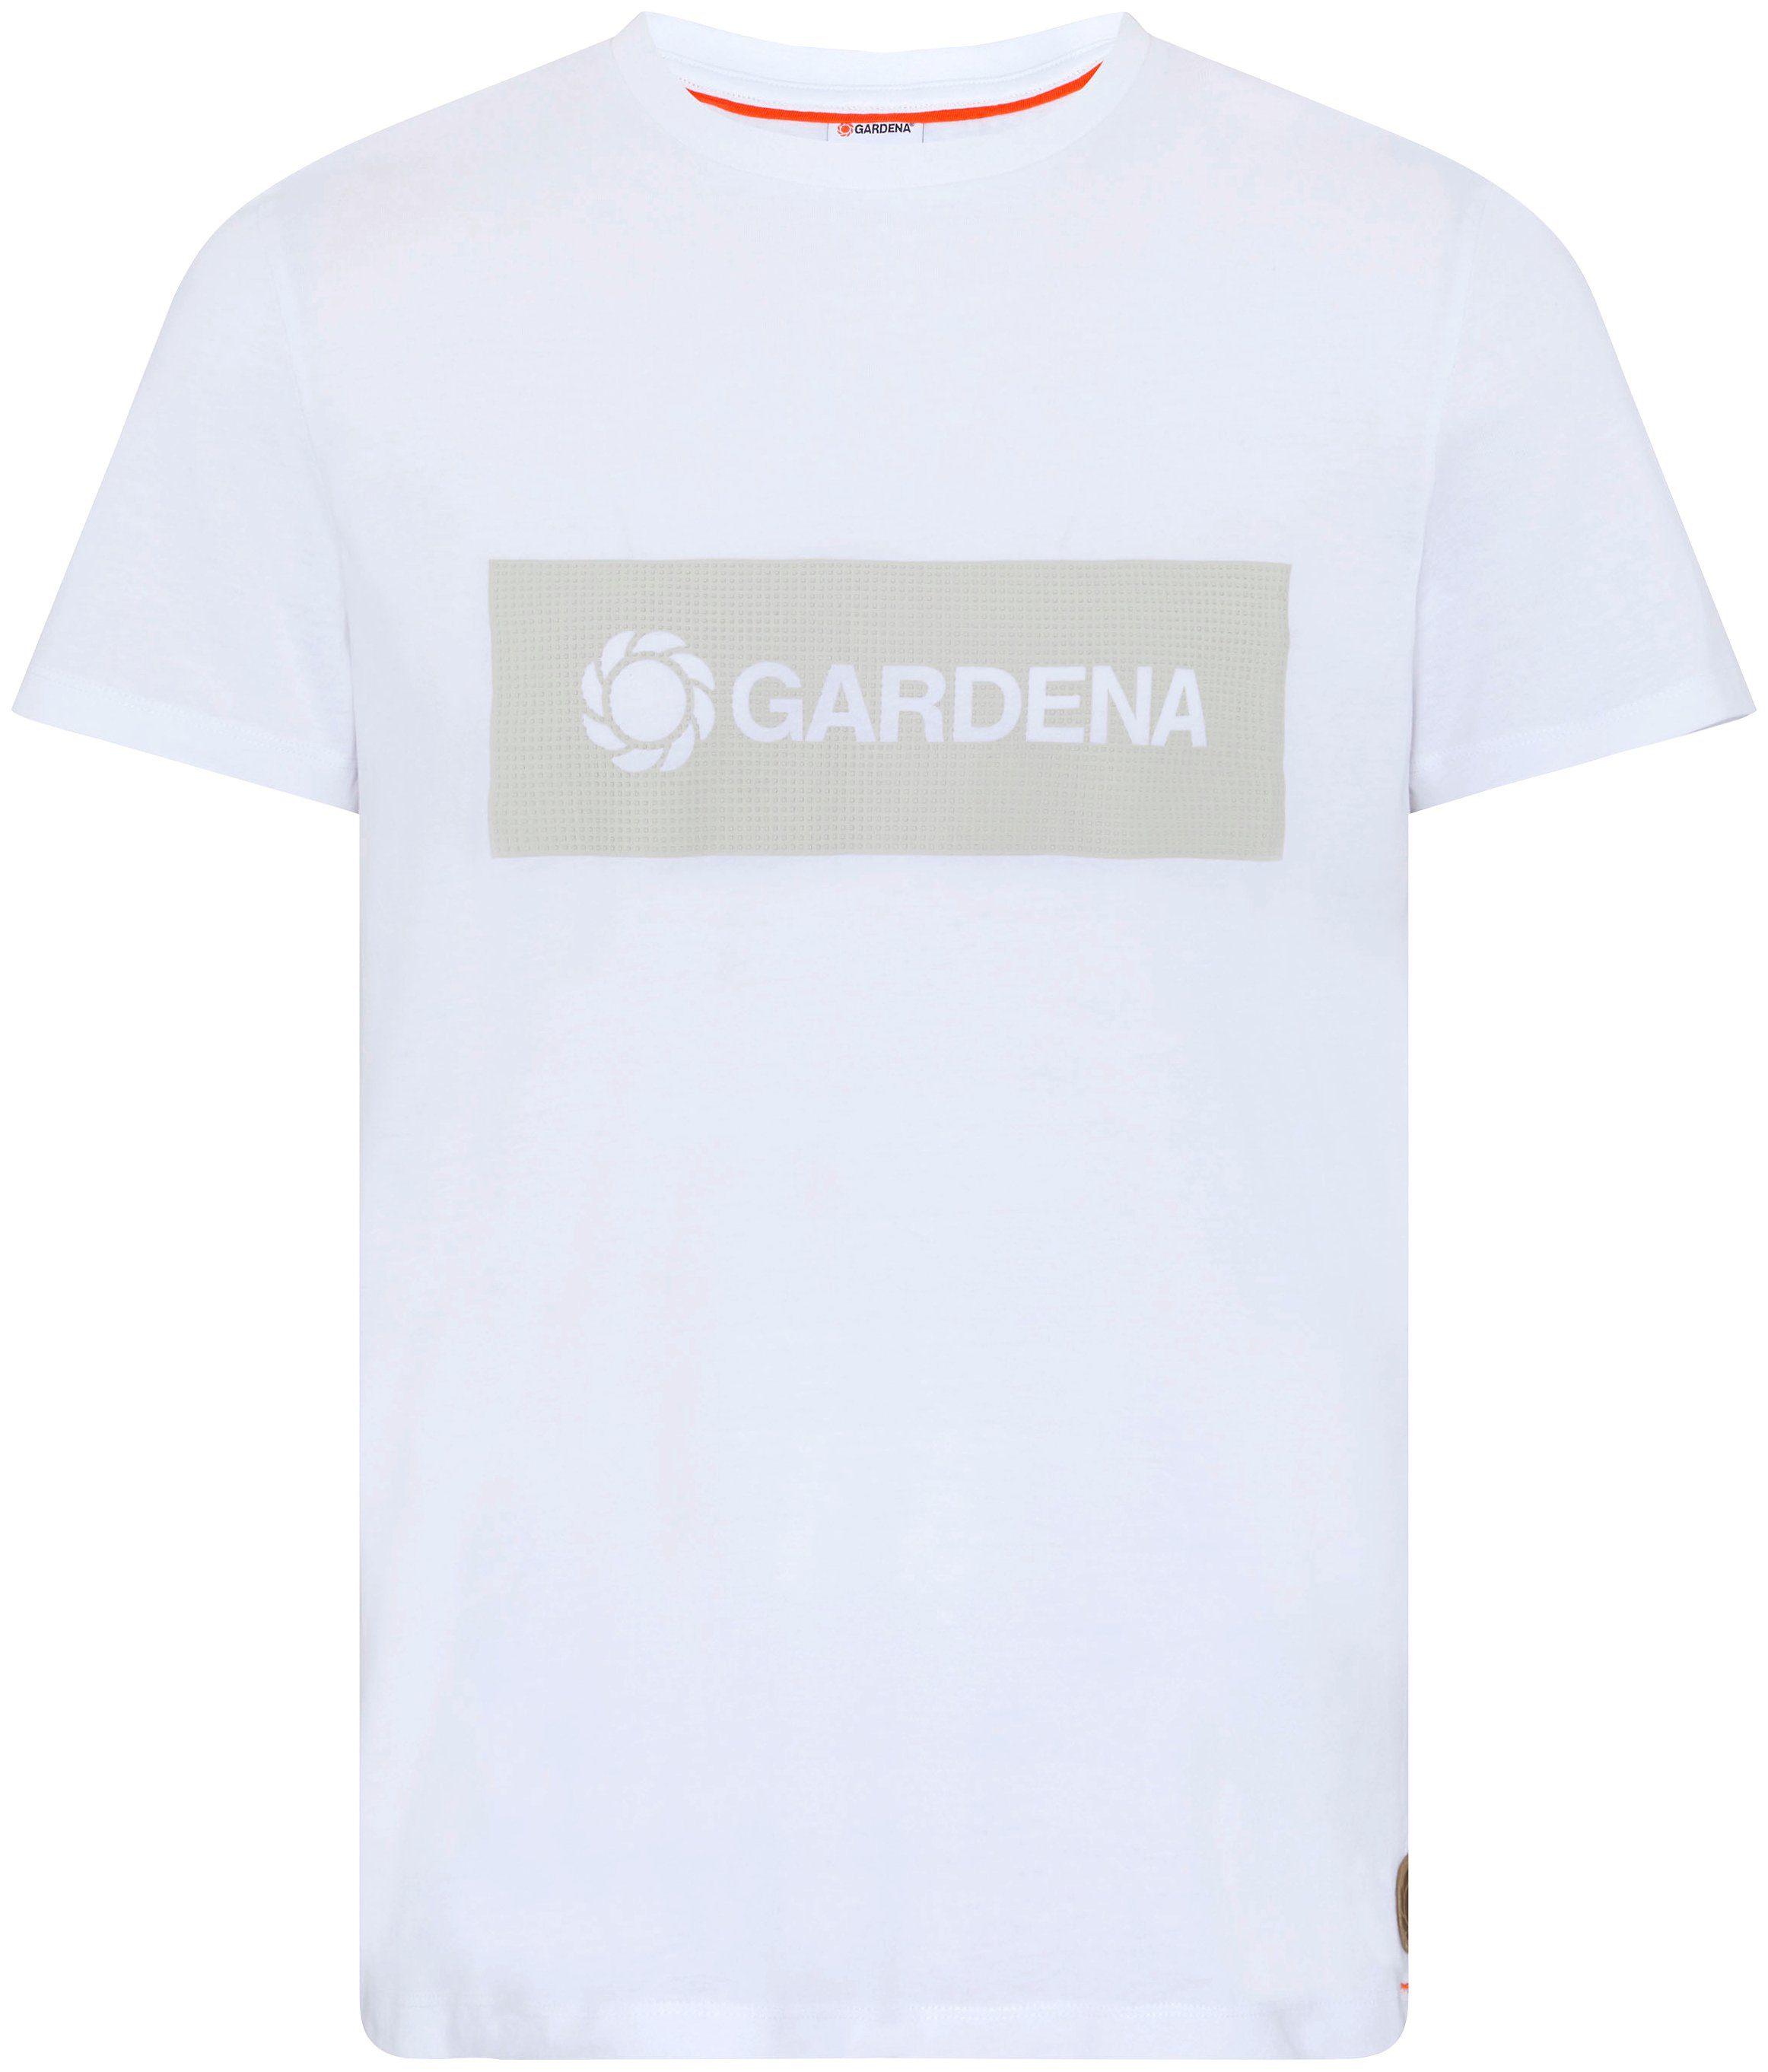 GARDENA T-Shirt Bright White mit Gardena-Logodruck | T-Shirts